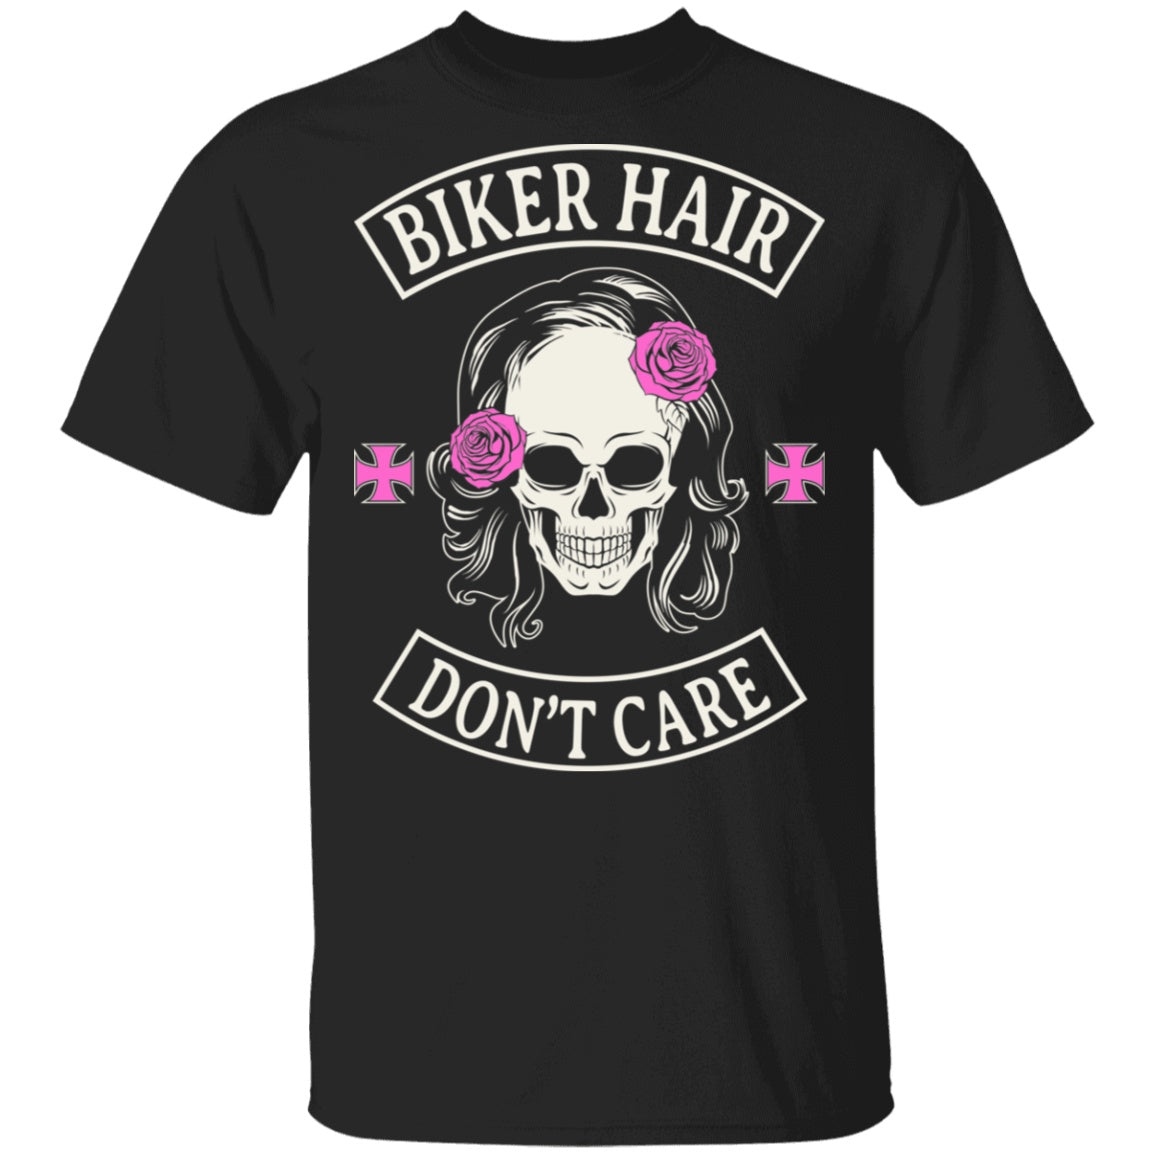 Apparel - Biker Hair, Don't Care Shirt